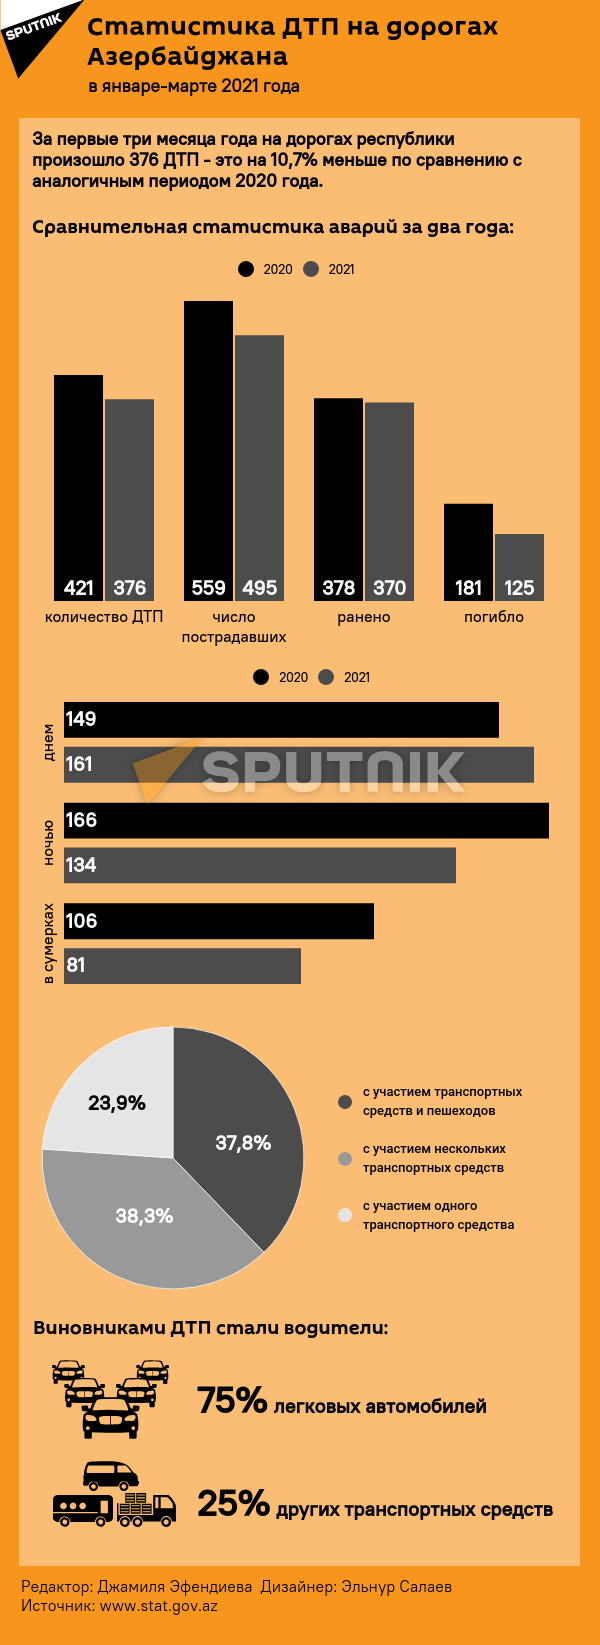 Инфографика: Статистика ДТП в Азербайджане - Sputnik Азербайджан, 1920, 19.05.2021